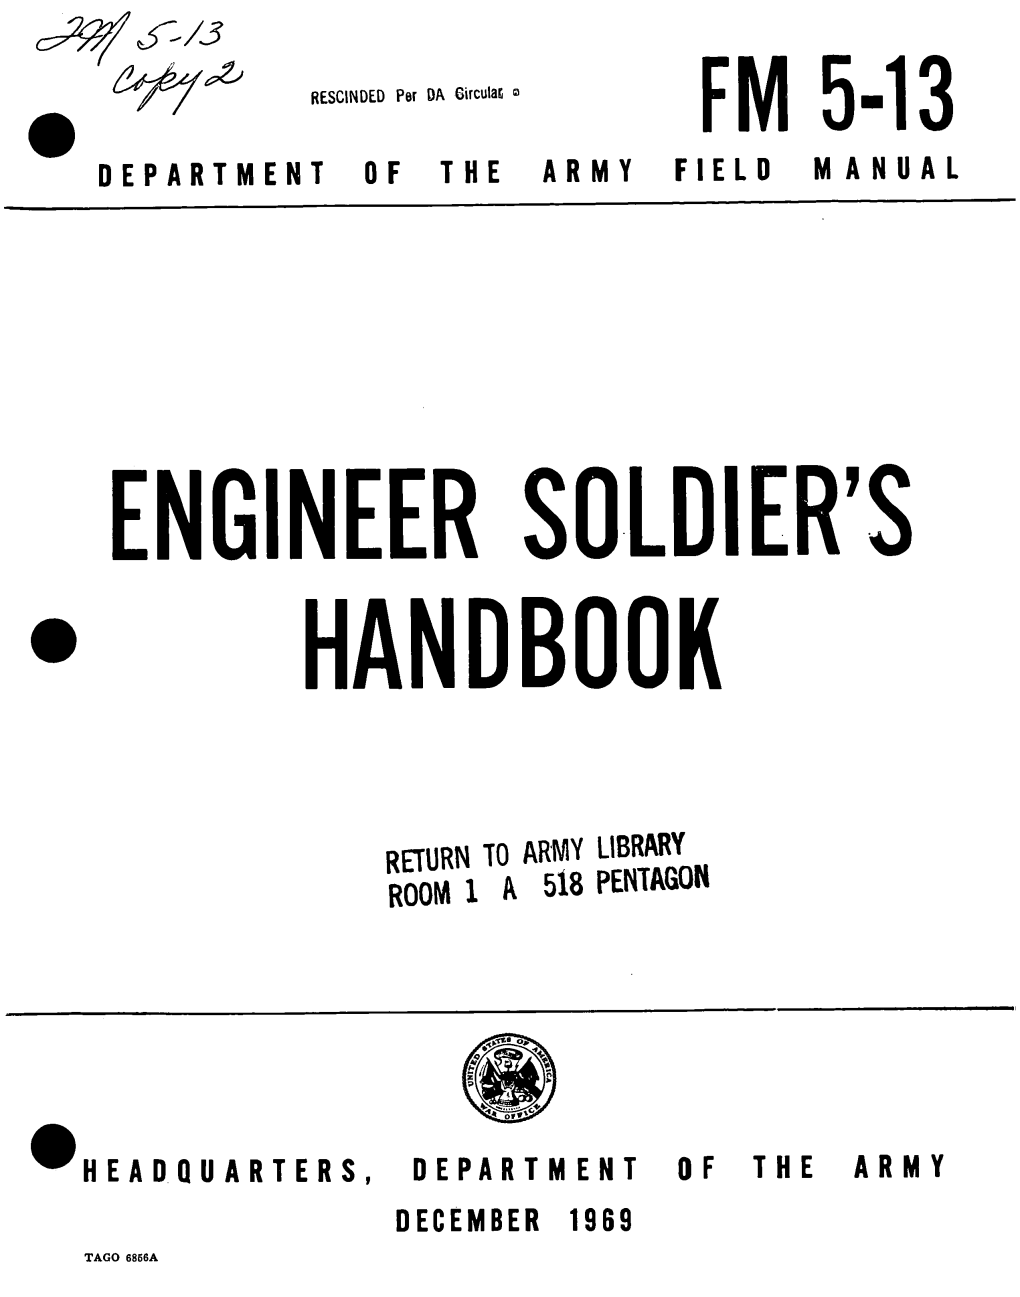 Engineer Soldier's Handbook